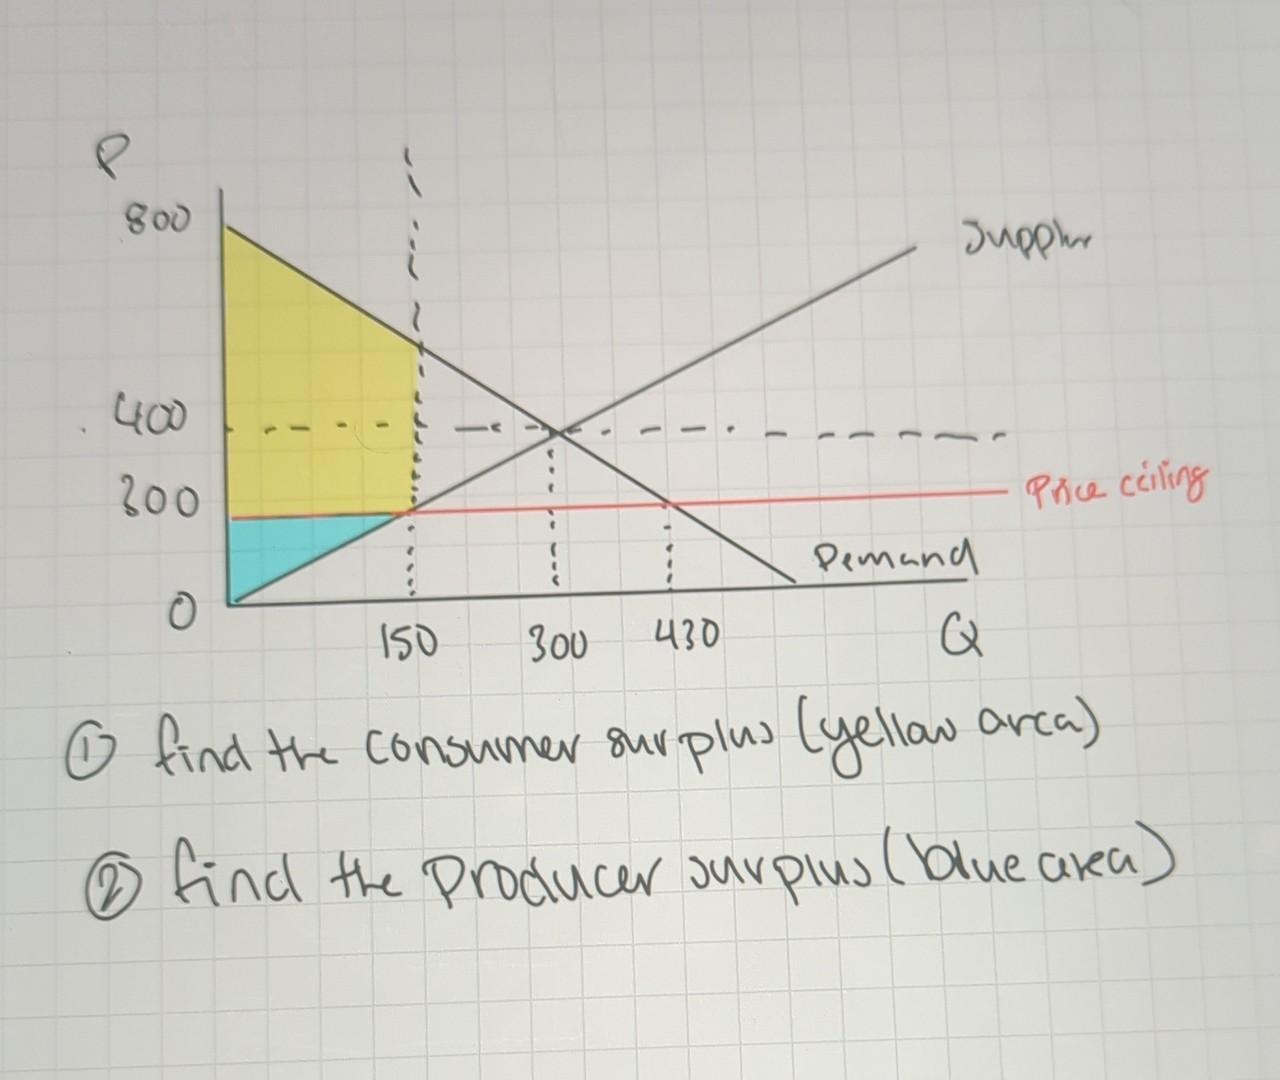 (1) find the consumer sur plus (yellow ar(a) (2) find the producer surplus (bluearea)